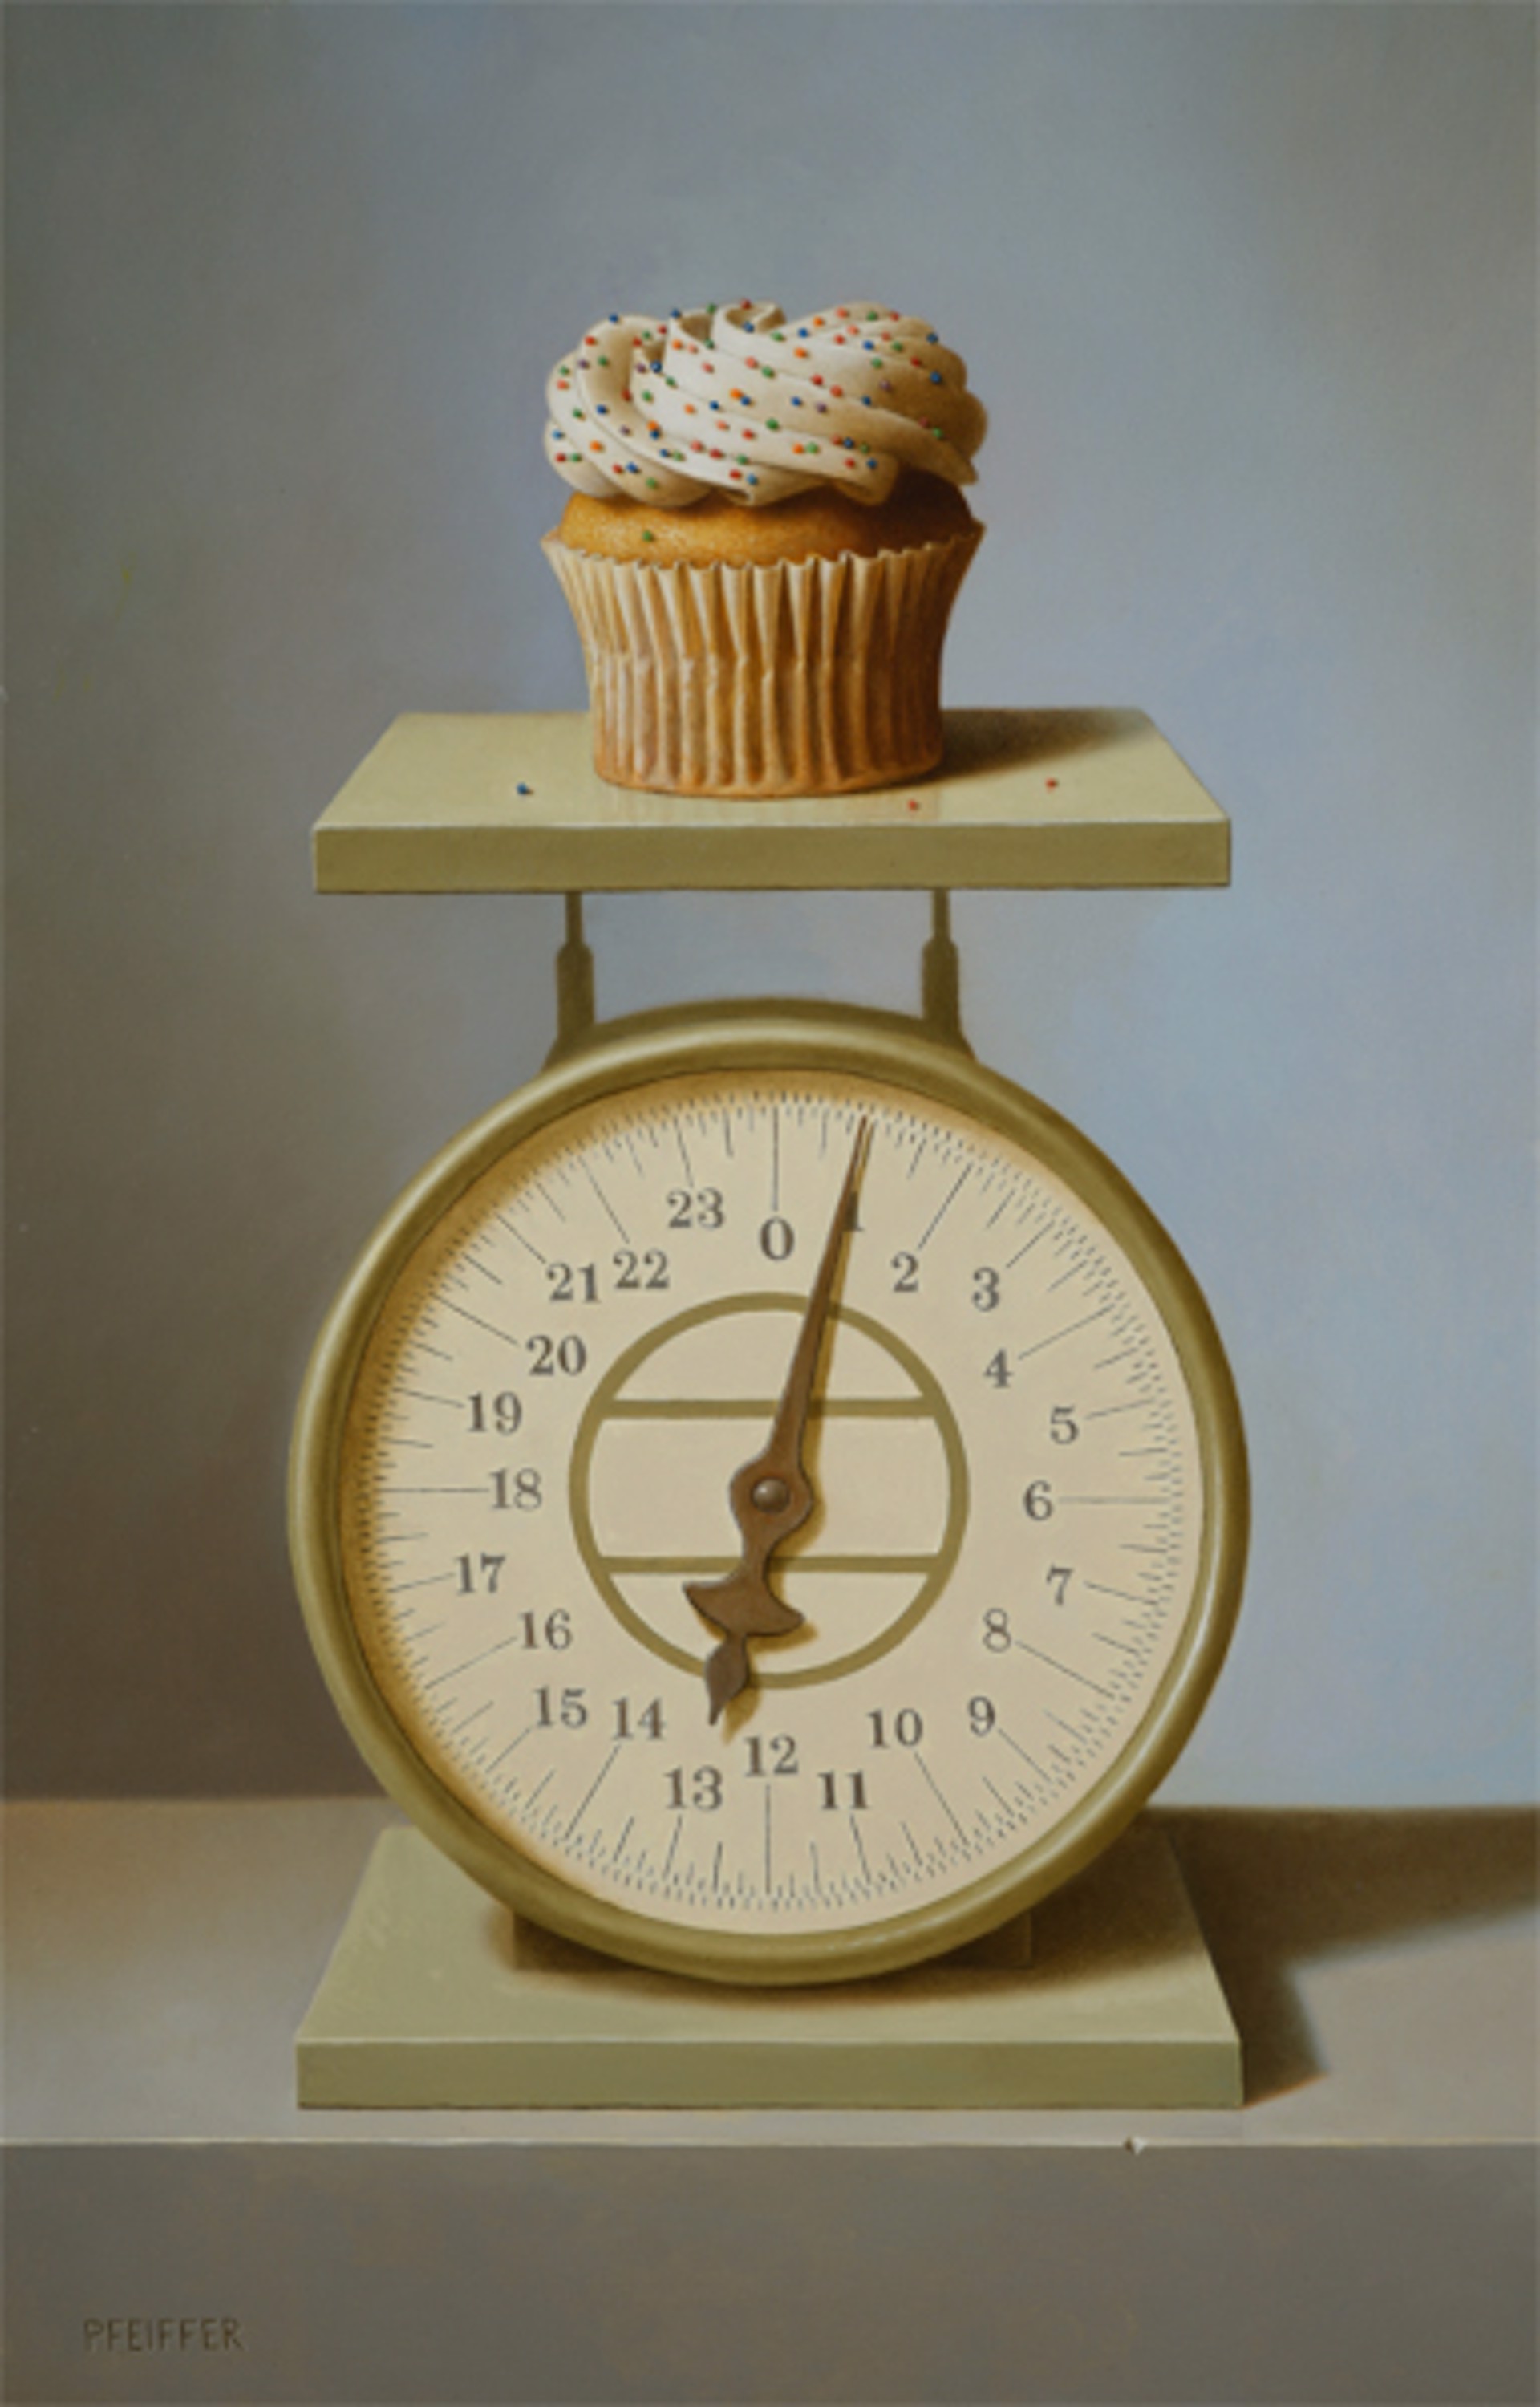 Pound Cake by Jacob A. Pfeiffer